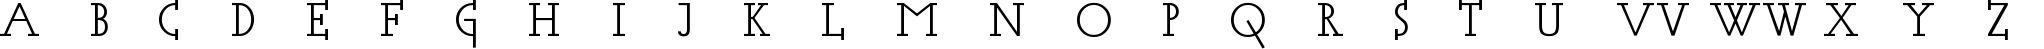 Пример написания английского алфавита шрифтом Posterio N Sans